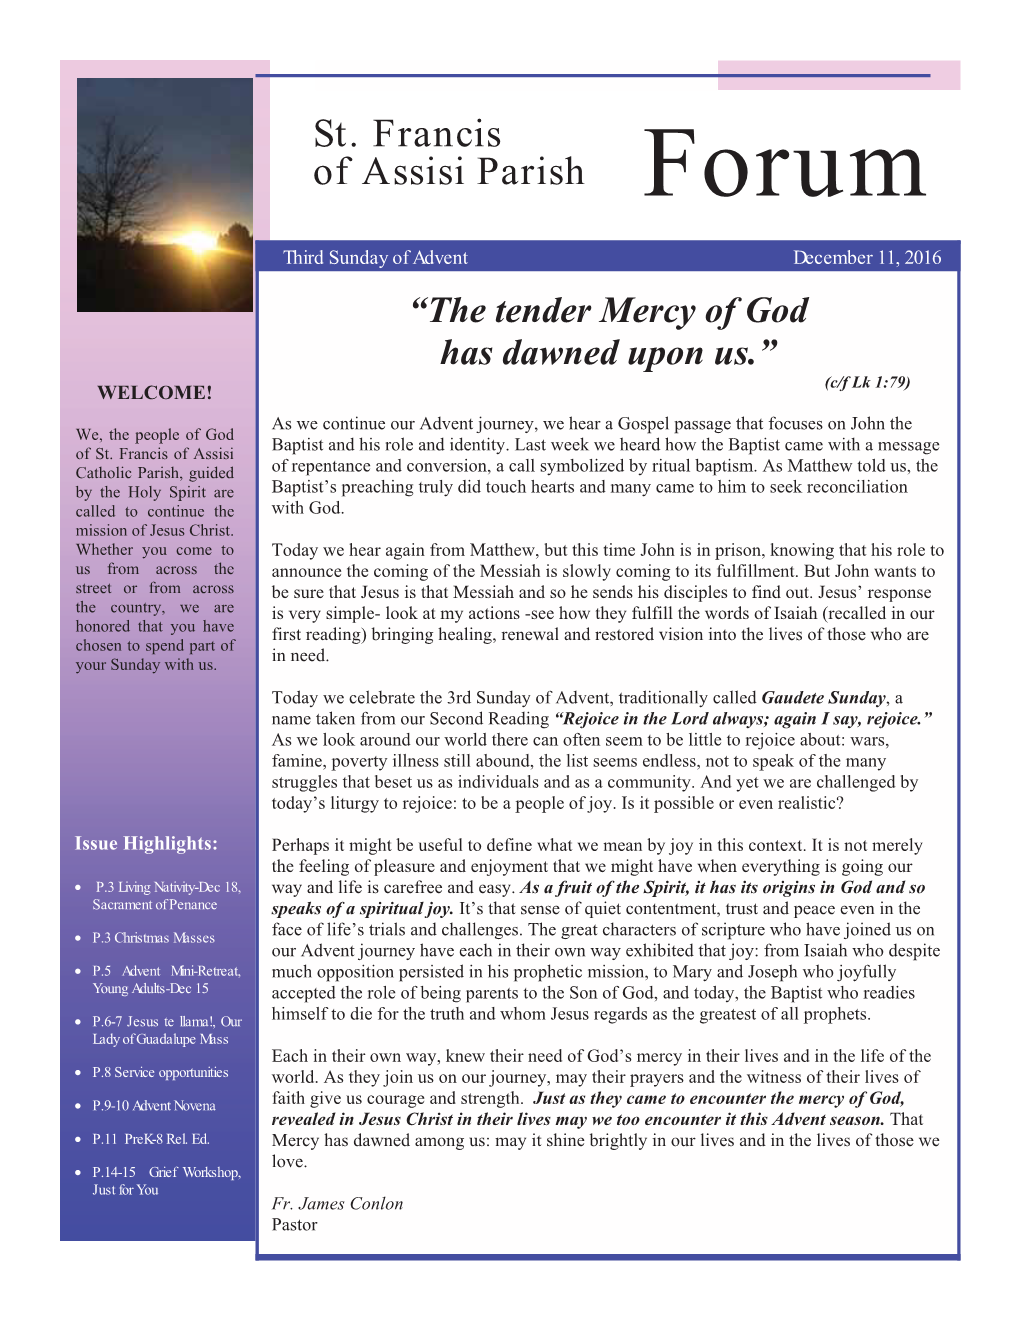 St. Francis of Assisi Parish Forum